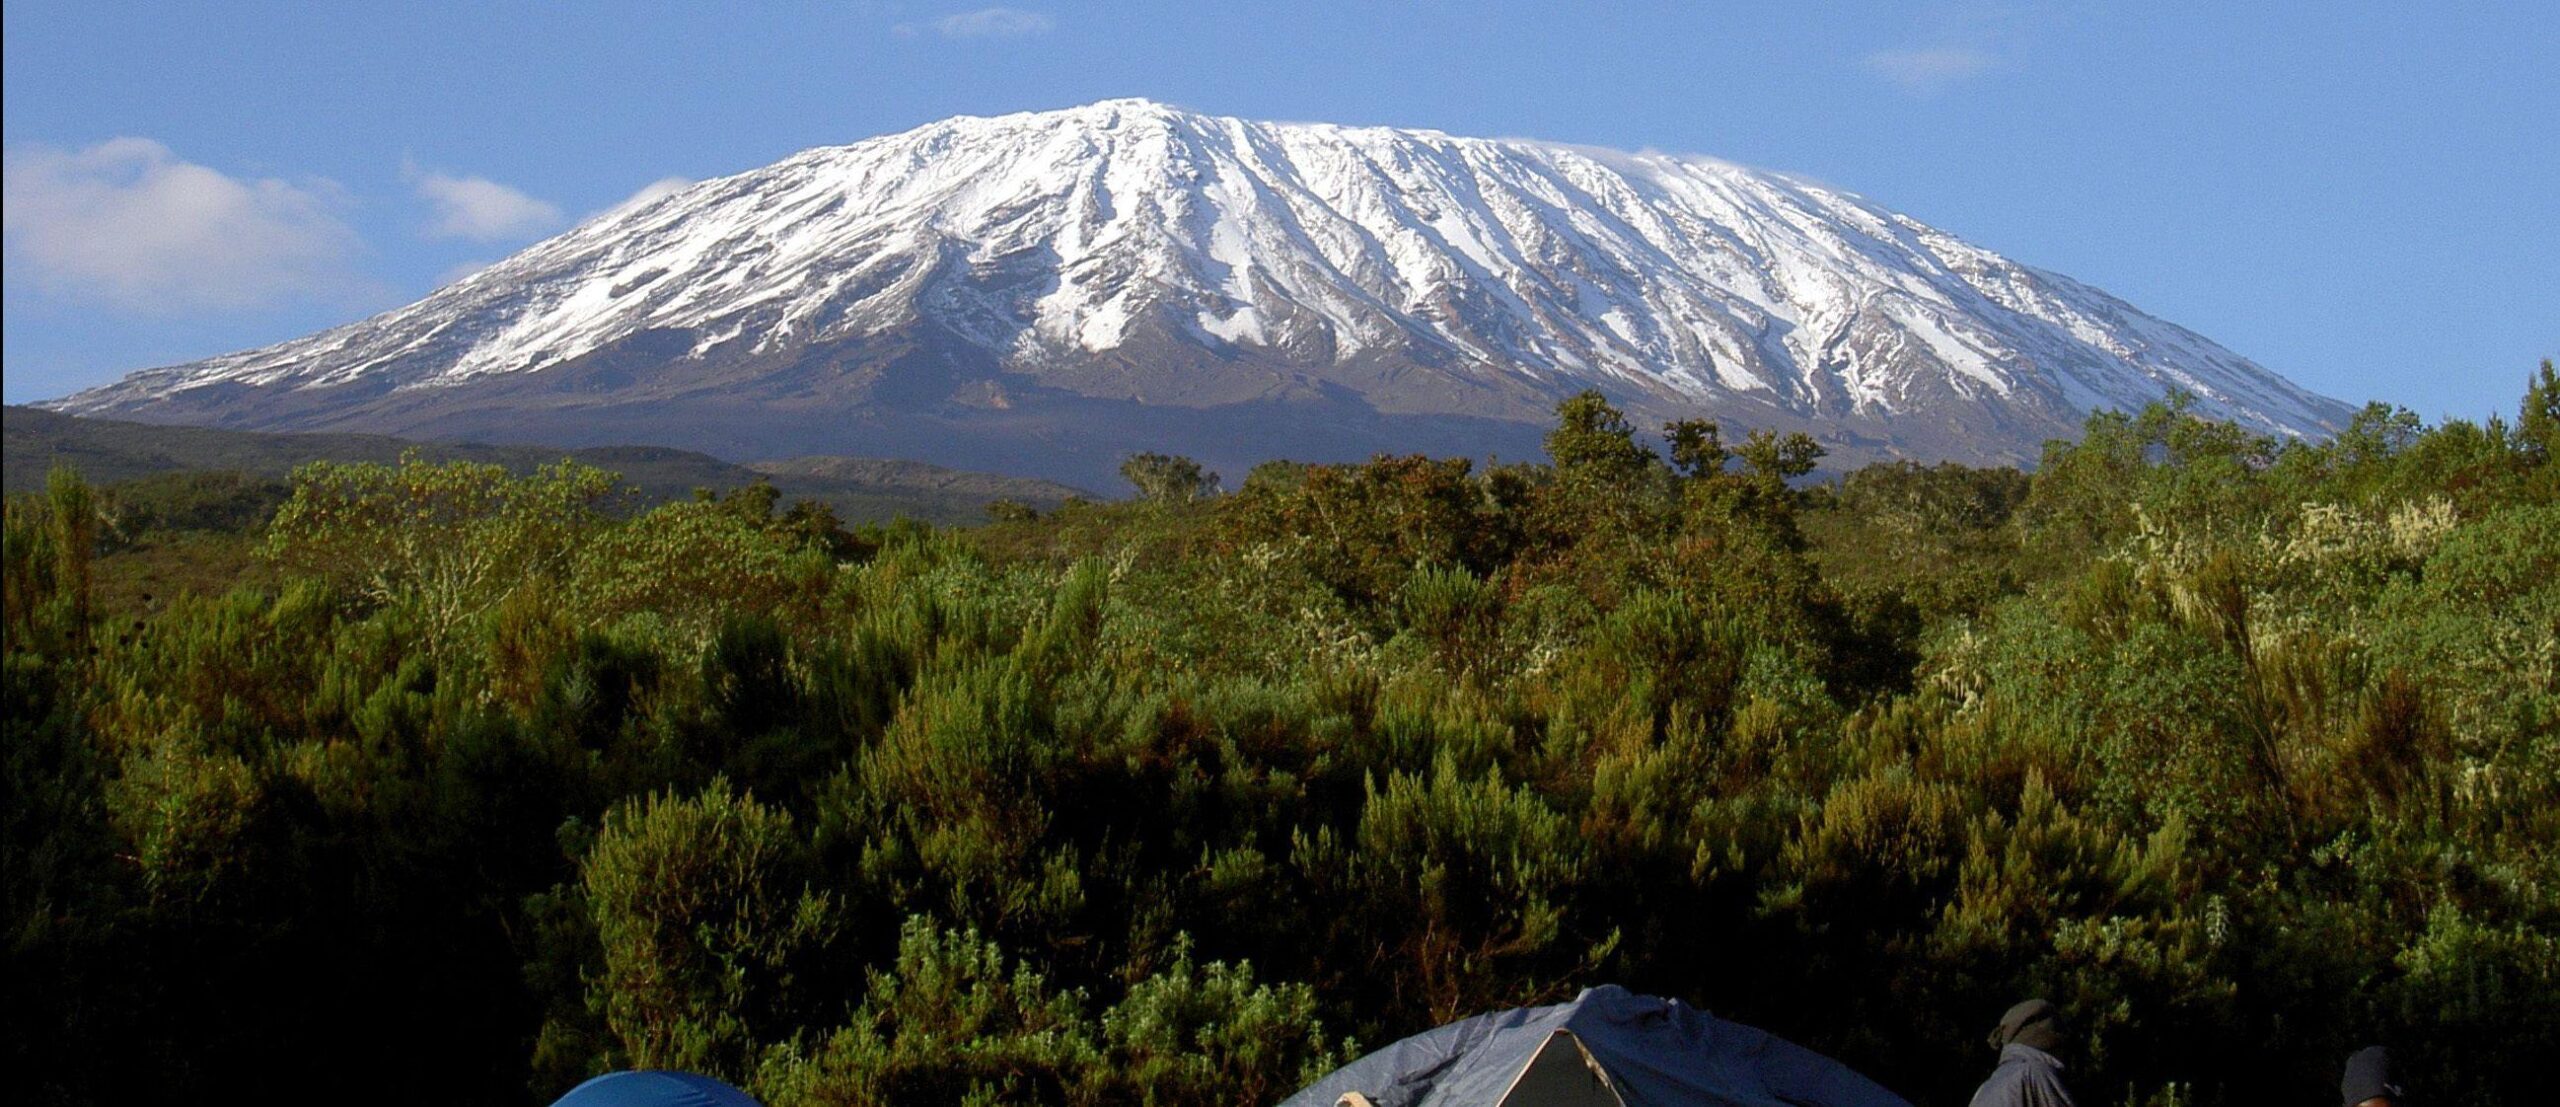 Mountain Kilimanjaro 2K Wallpapers